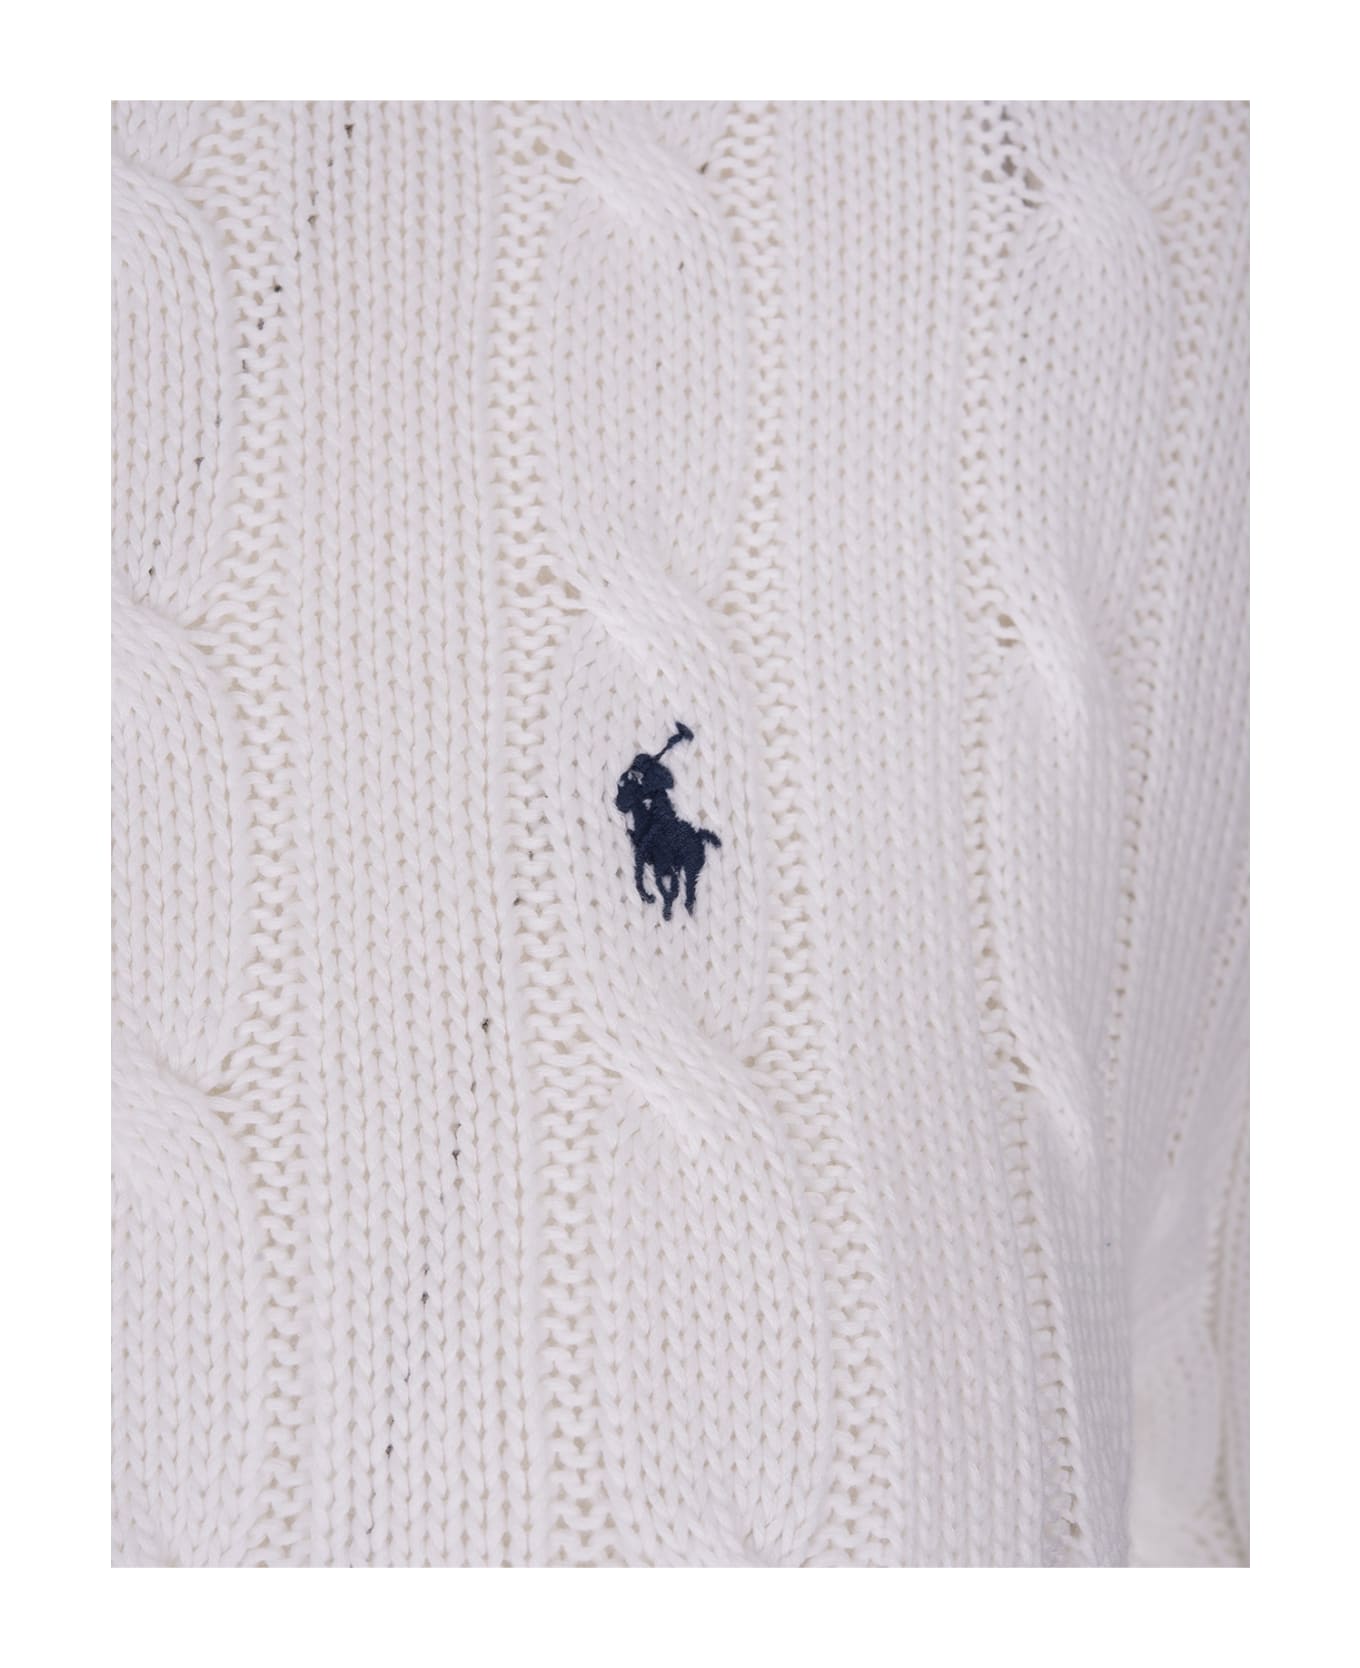 Ralph Lauren Crew Neck Sweater In White Braided Knit - White ニットウェア